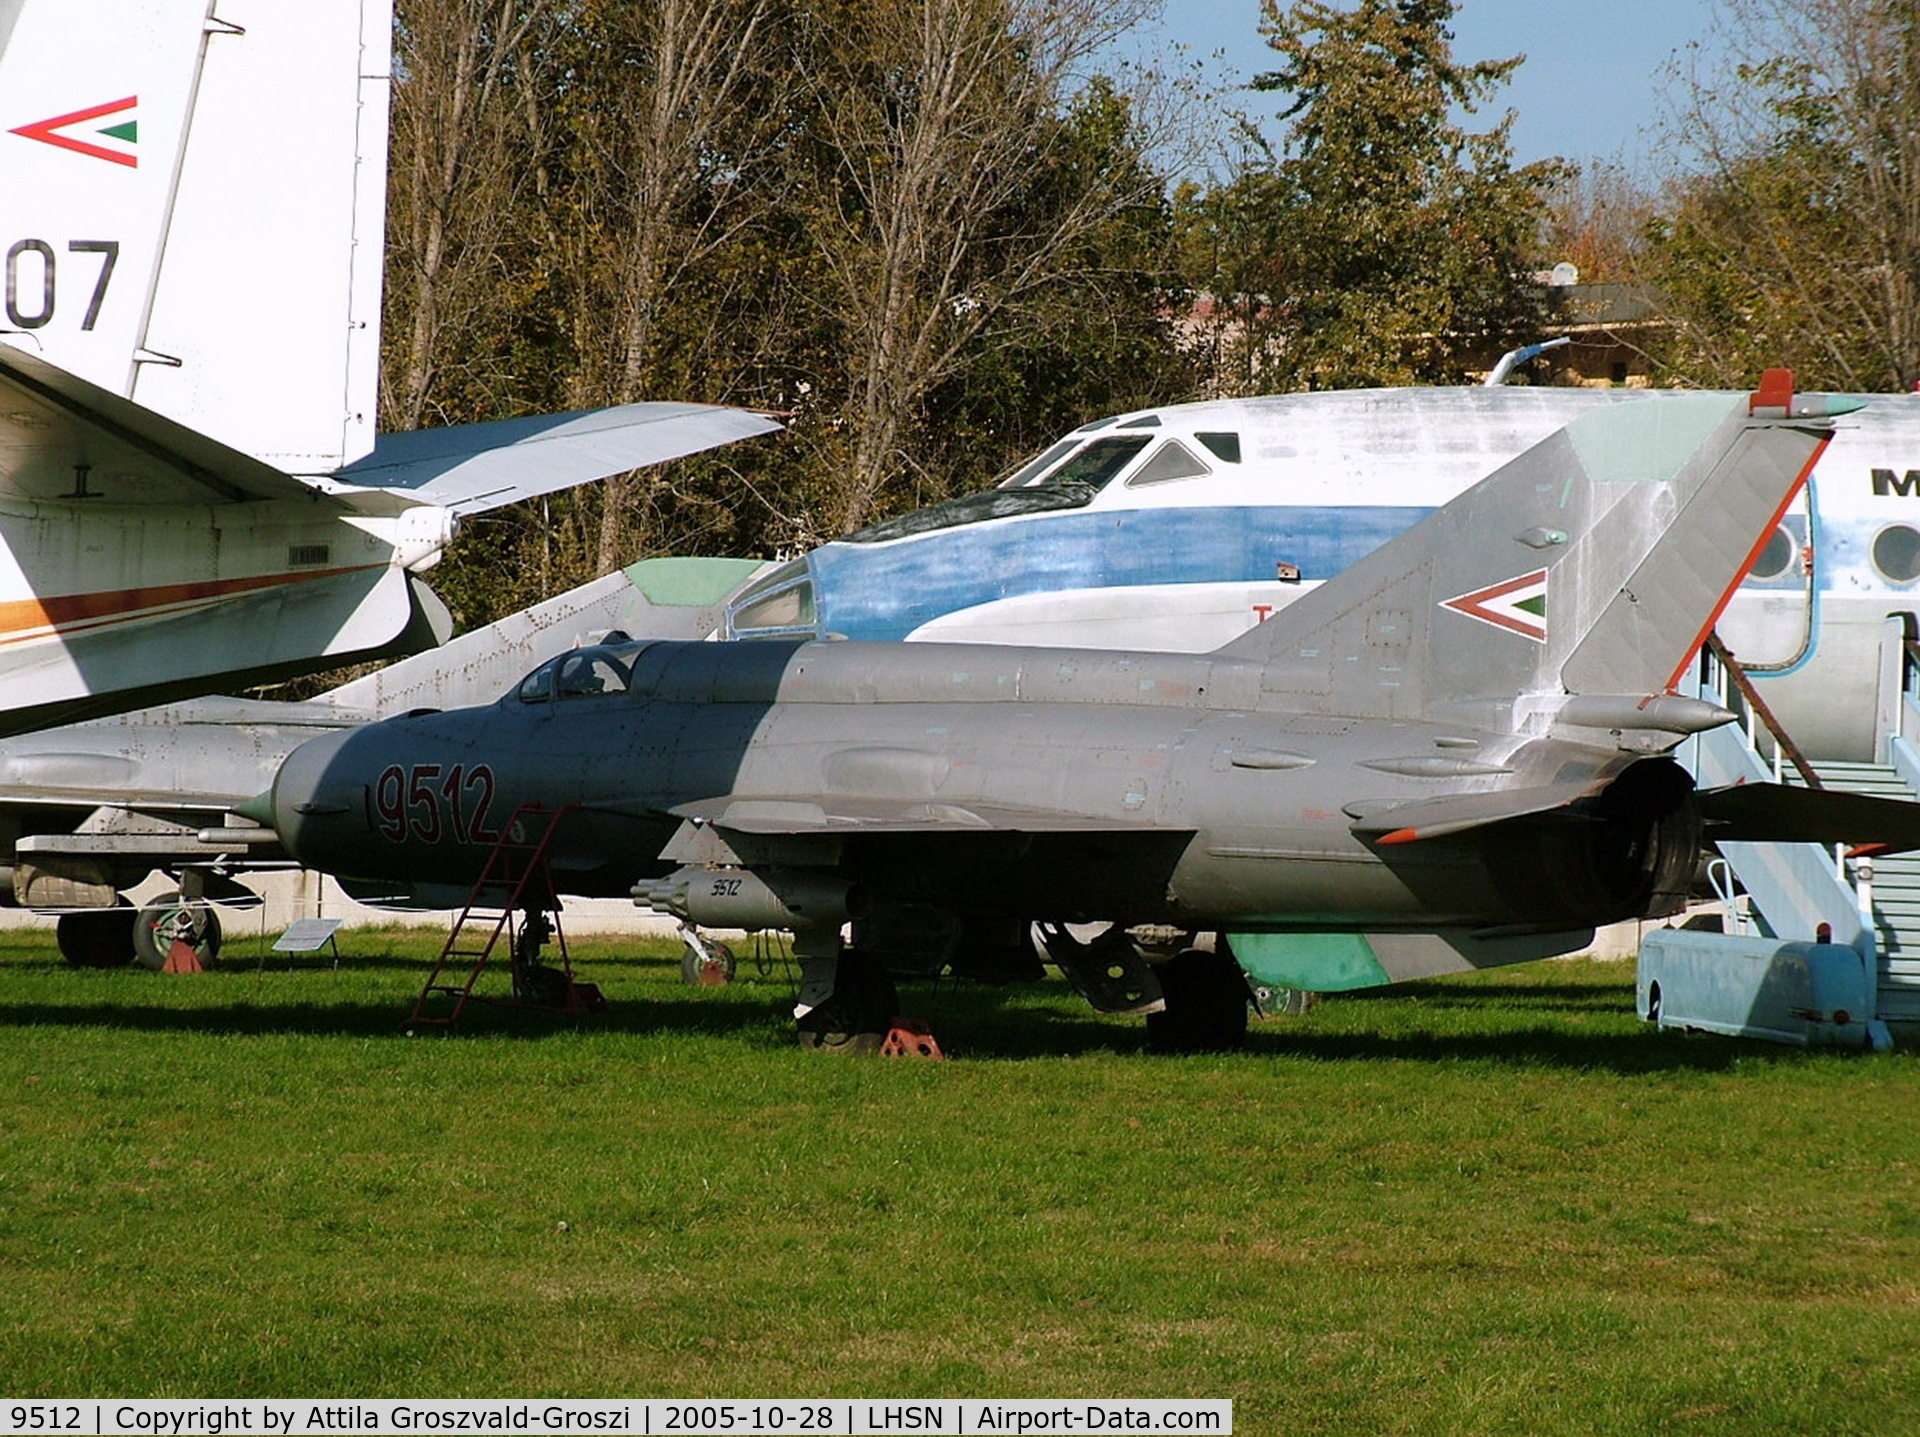 9512, 1974 Mikoyan-Gurevich MiG-21MF C/N 969512, Szolnok airplane museum, Hungary